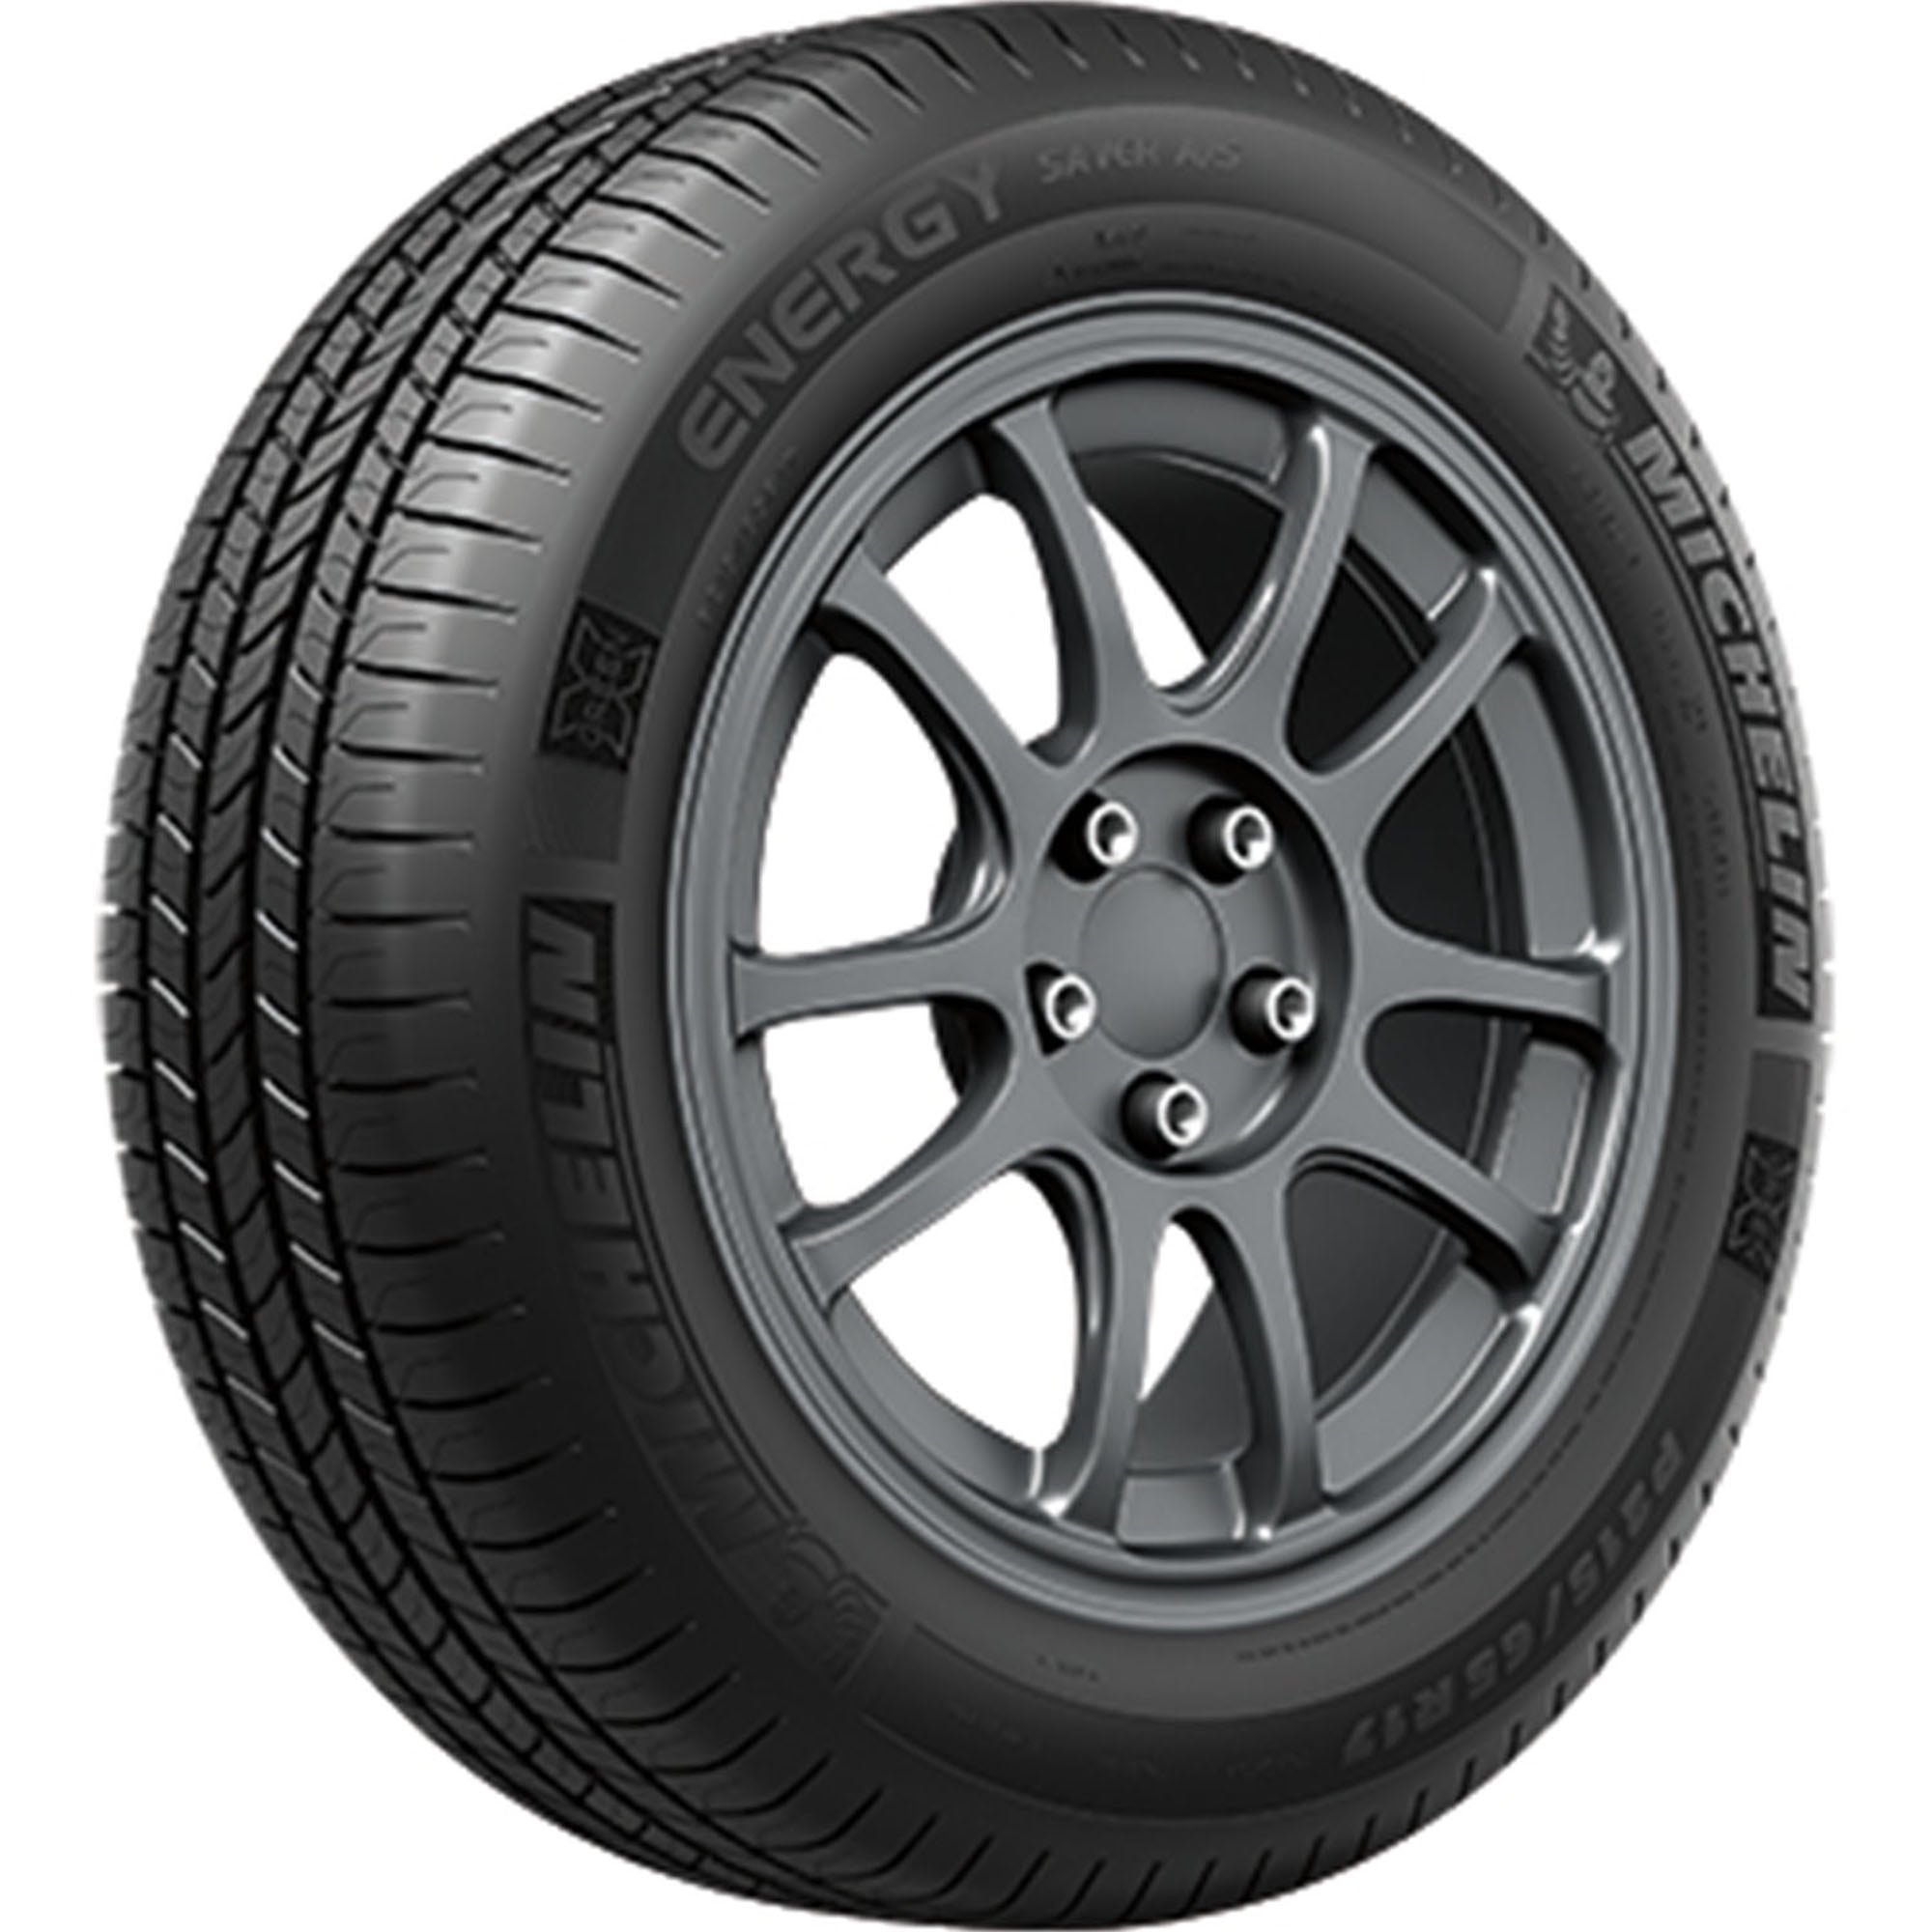 Michelin Energy Tire 205/55R16 Saver Passenger A/S Season 91H All